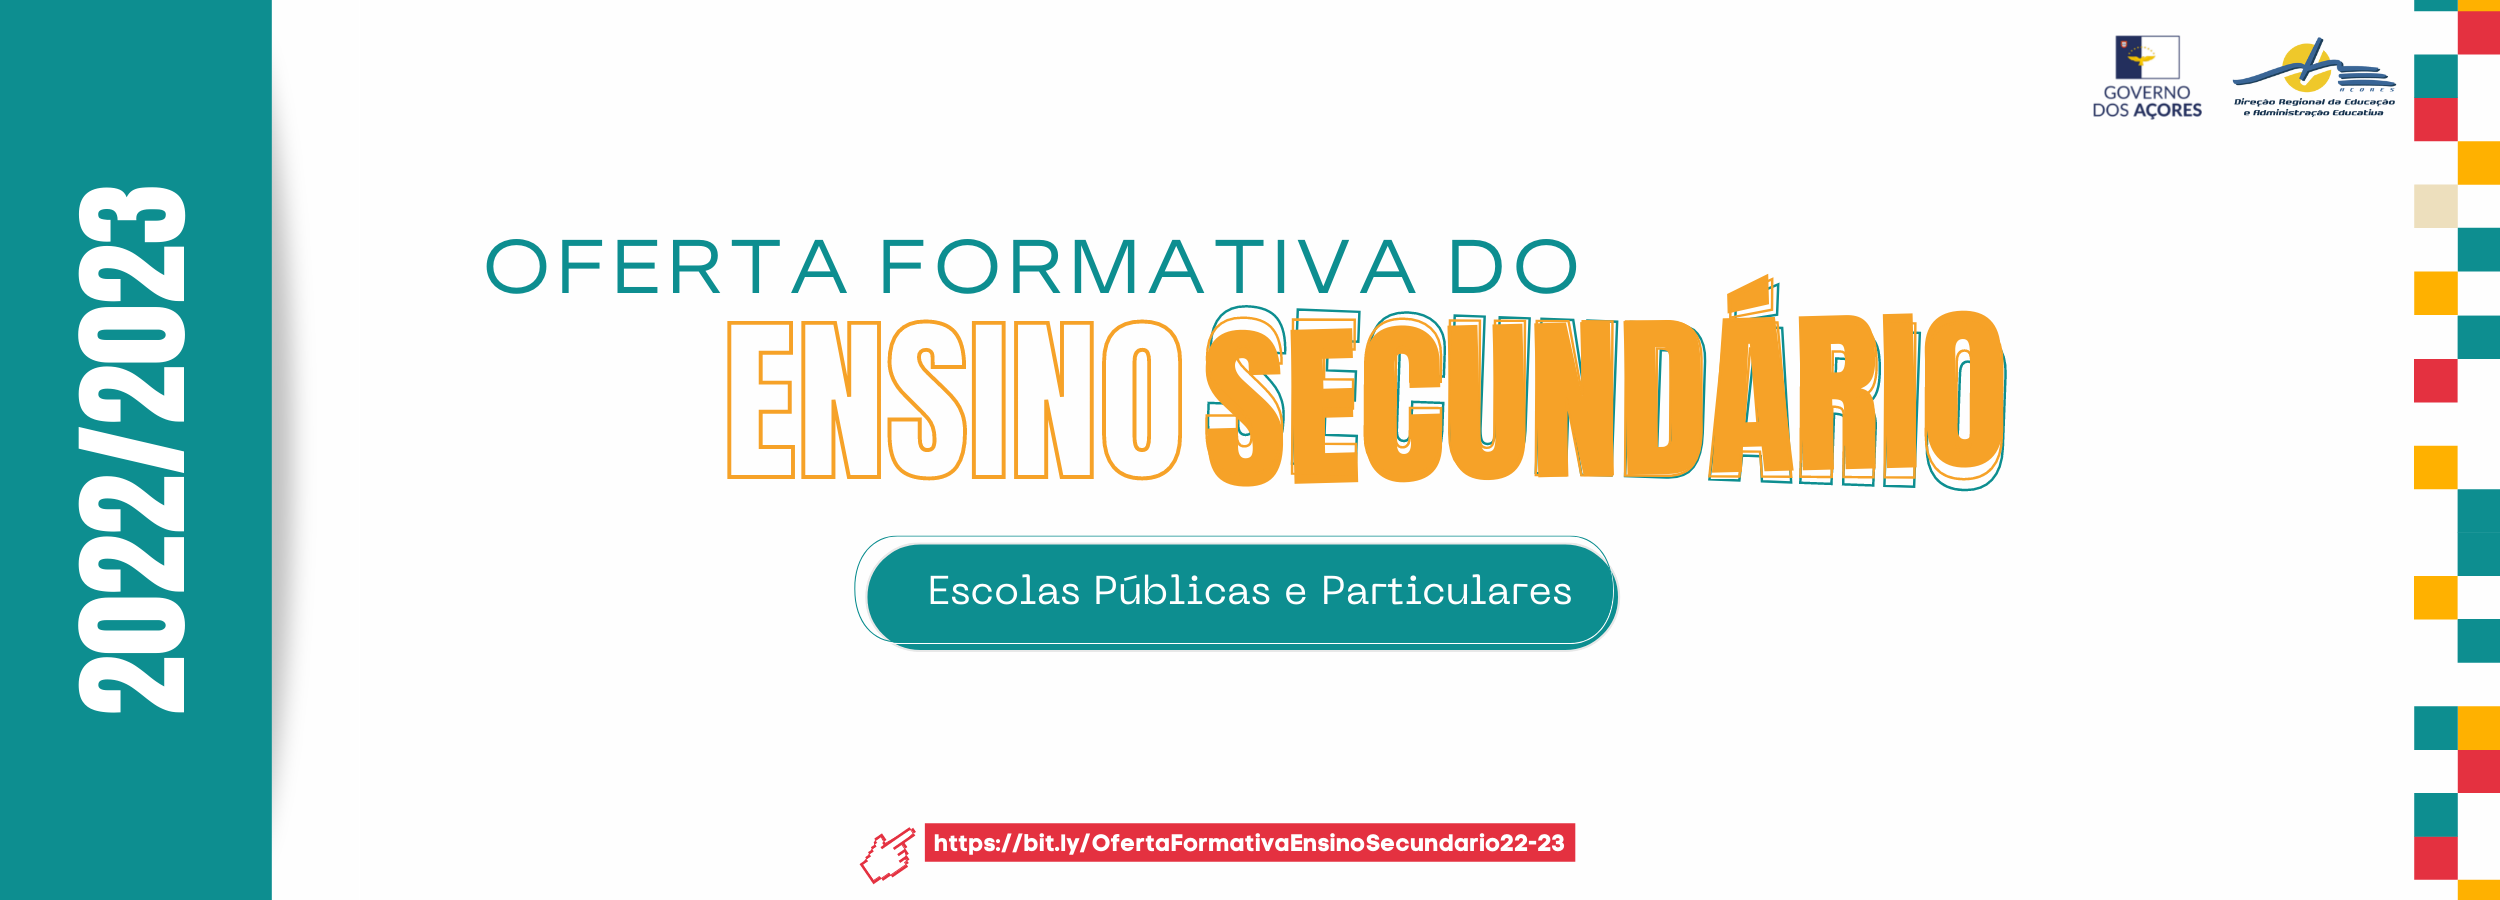 Oferta Formativa Secundário - banner 2223 final 2